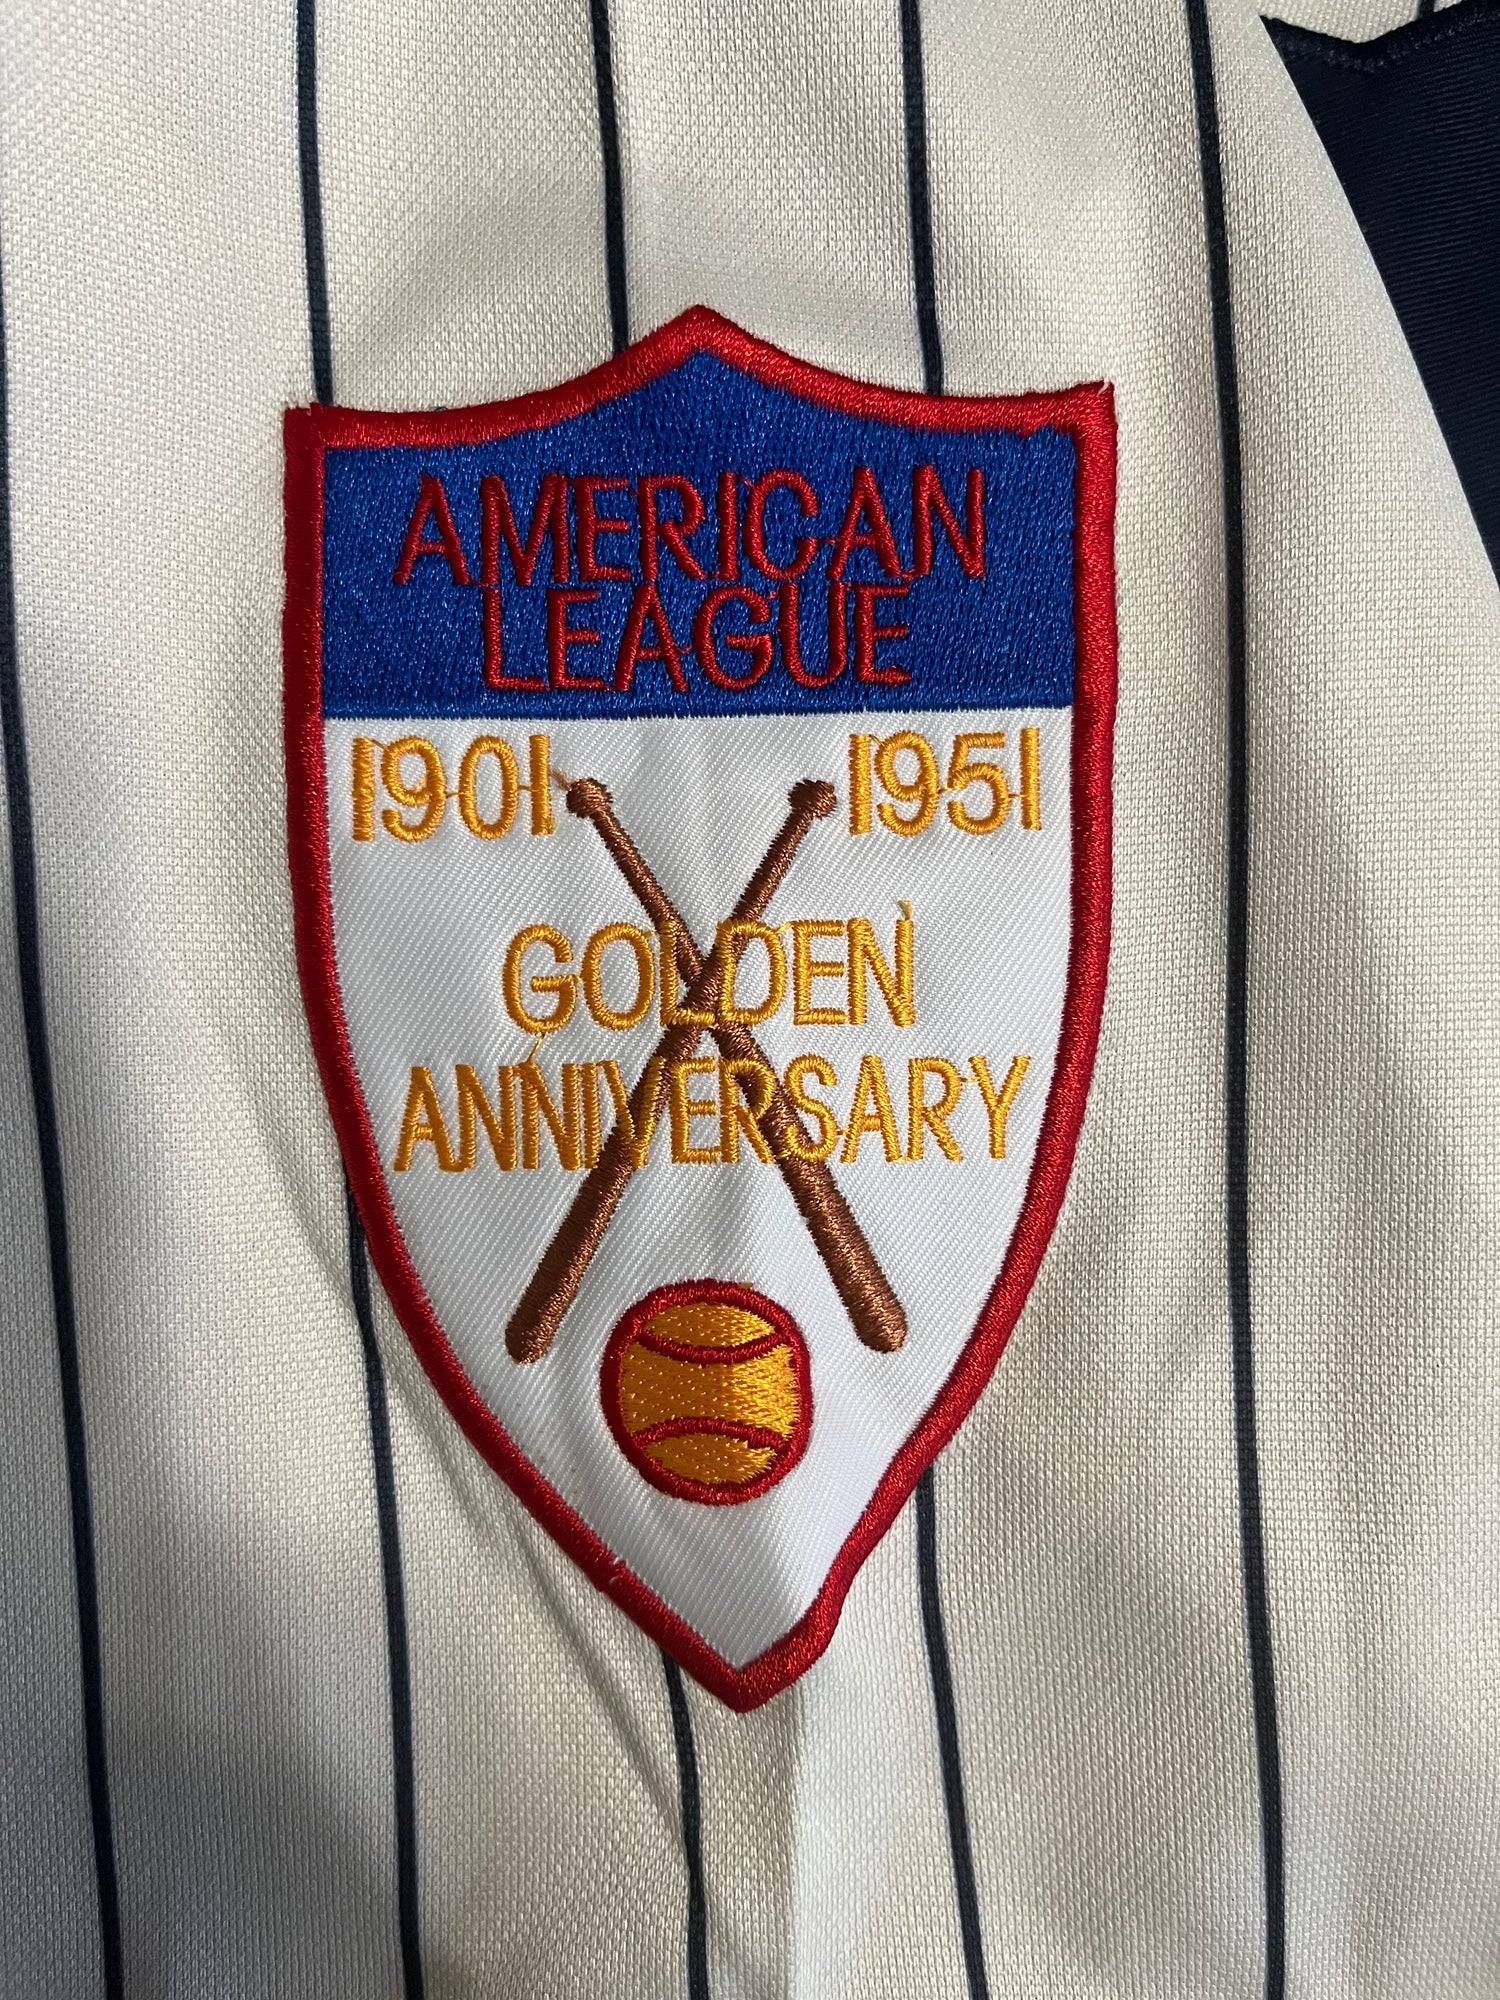 Yogi Berra Yankees Nike Jerseys, Shirts and Souvenirs